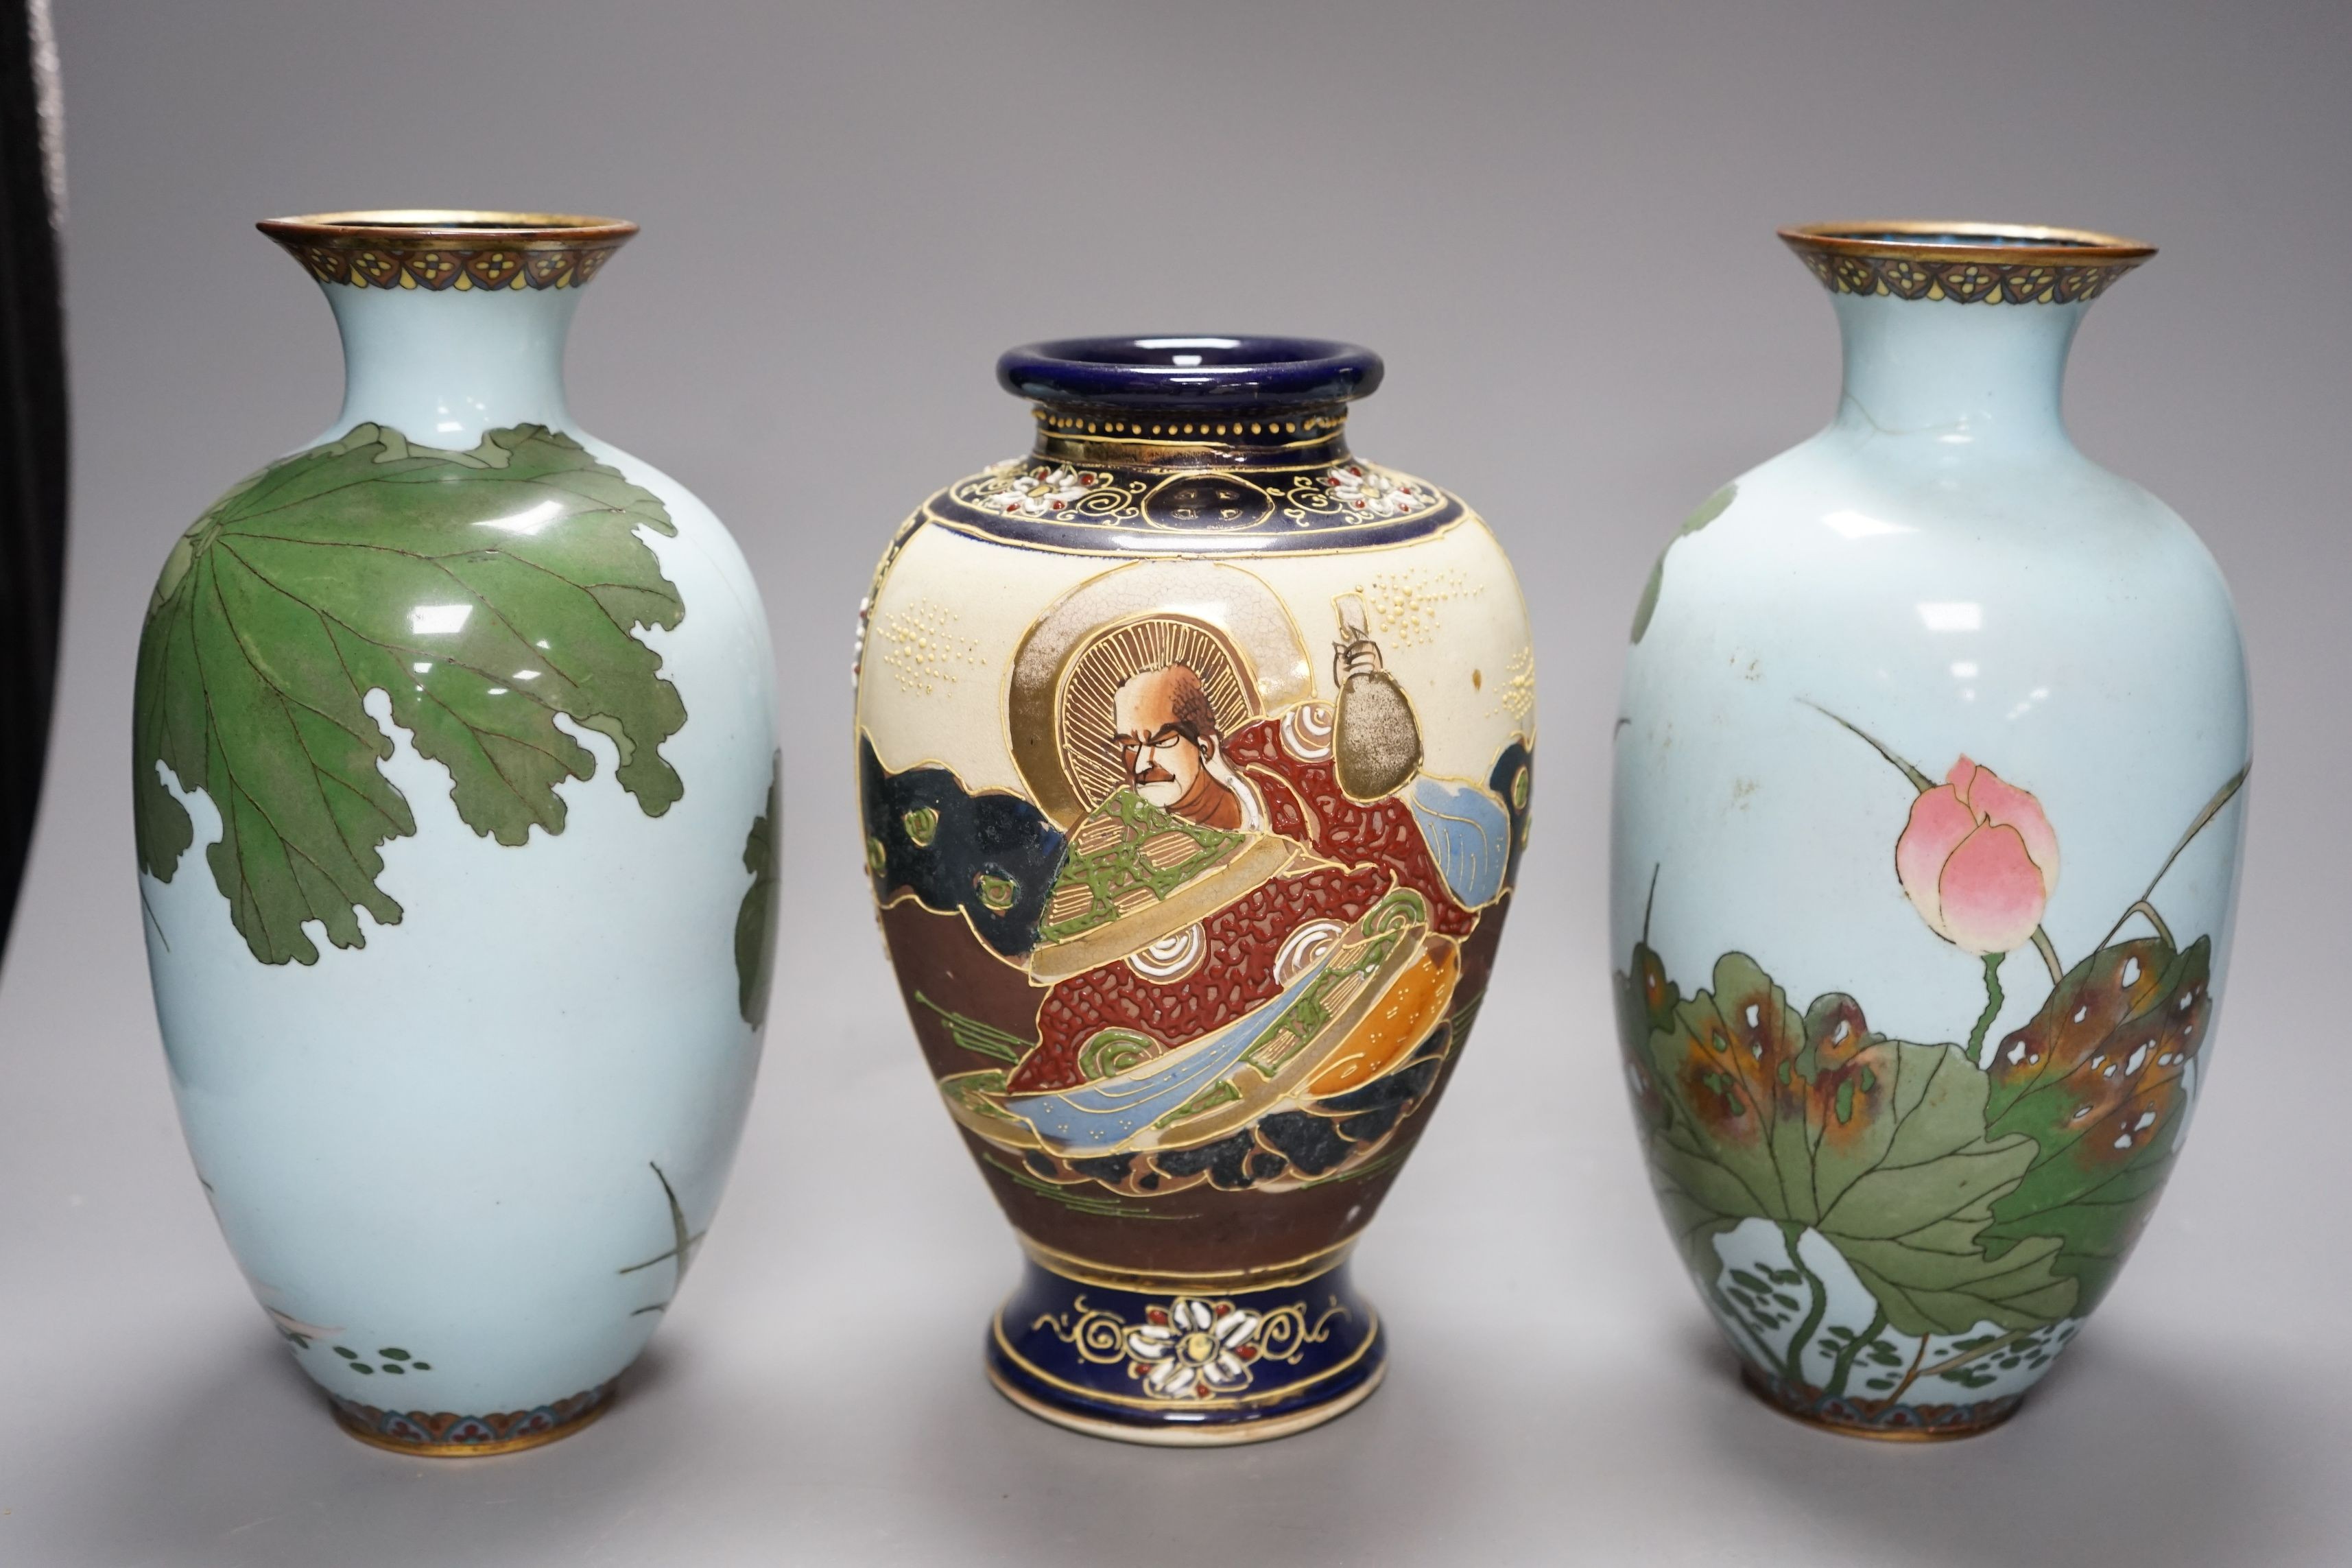 A pair of Japanese cloisonné enamel vases and a Satsuma vase (3), cloisonné vases 24cms high